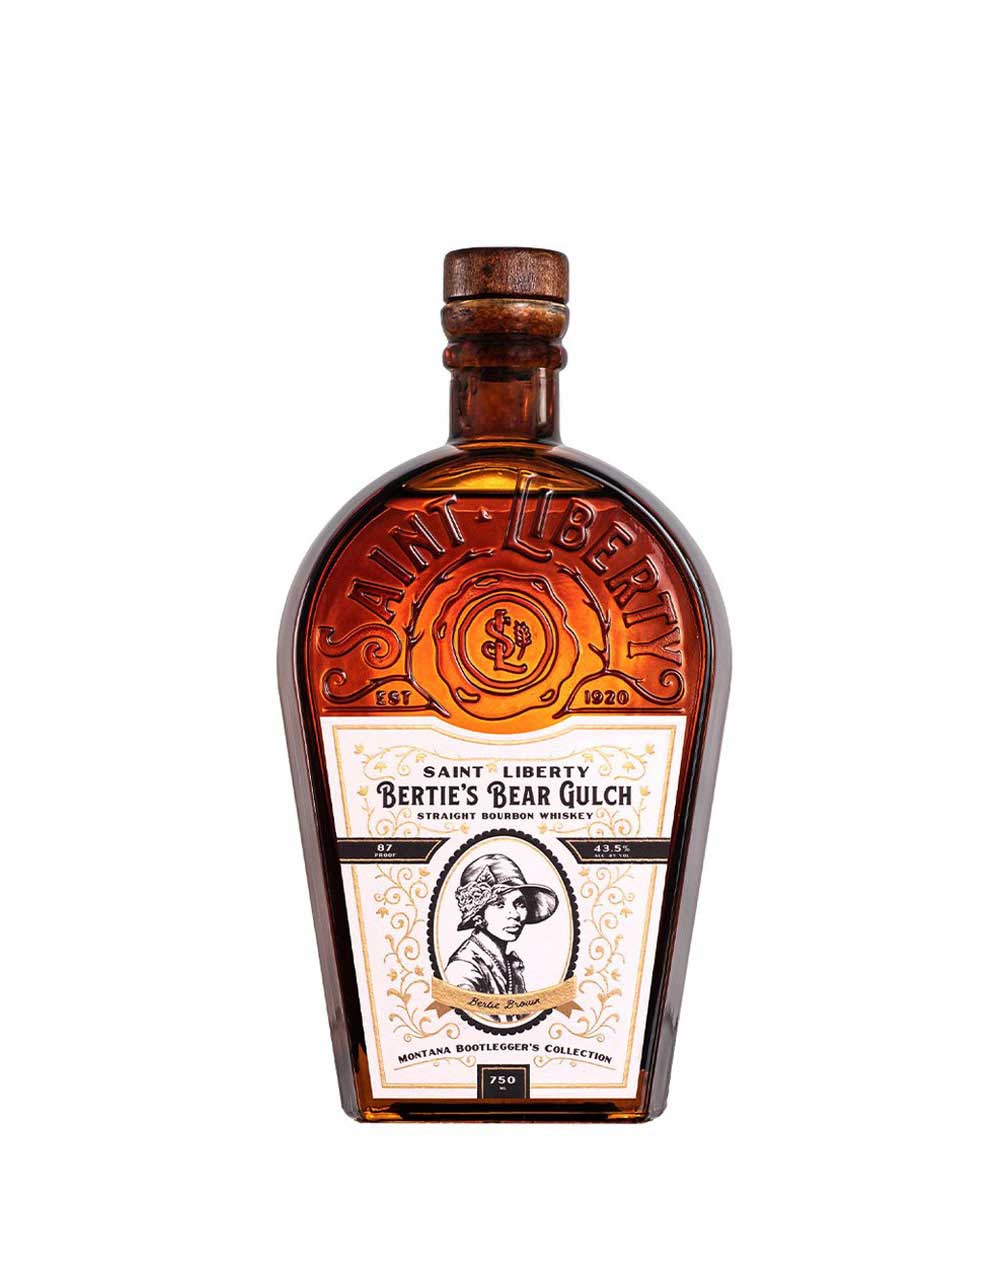 Saint Liberty Bertie's Bear Gulch Bourbon Whiskey